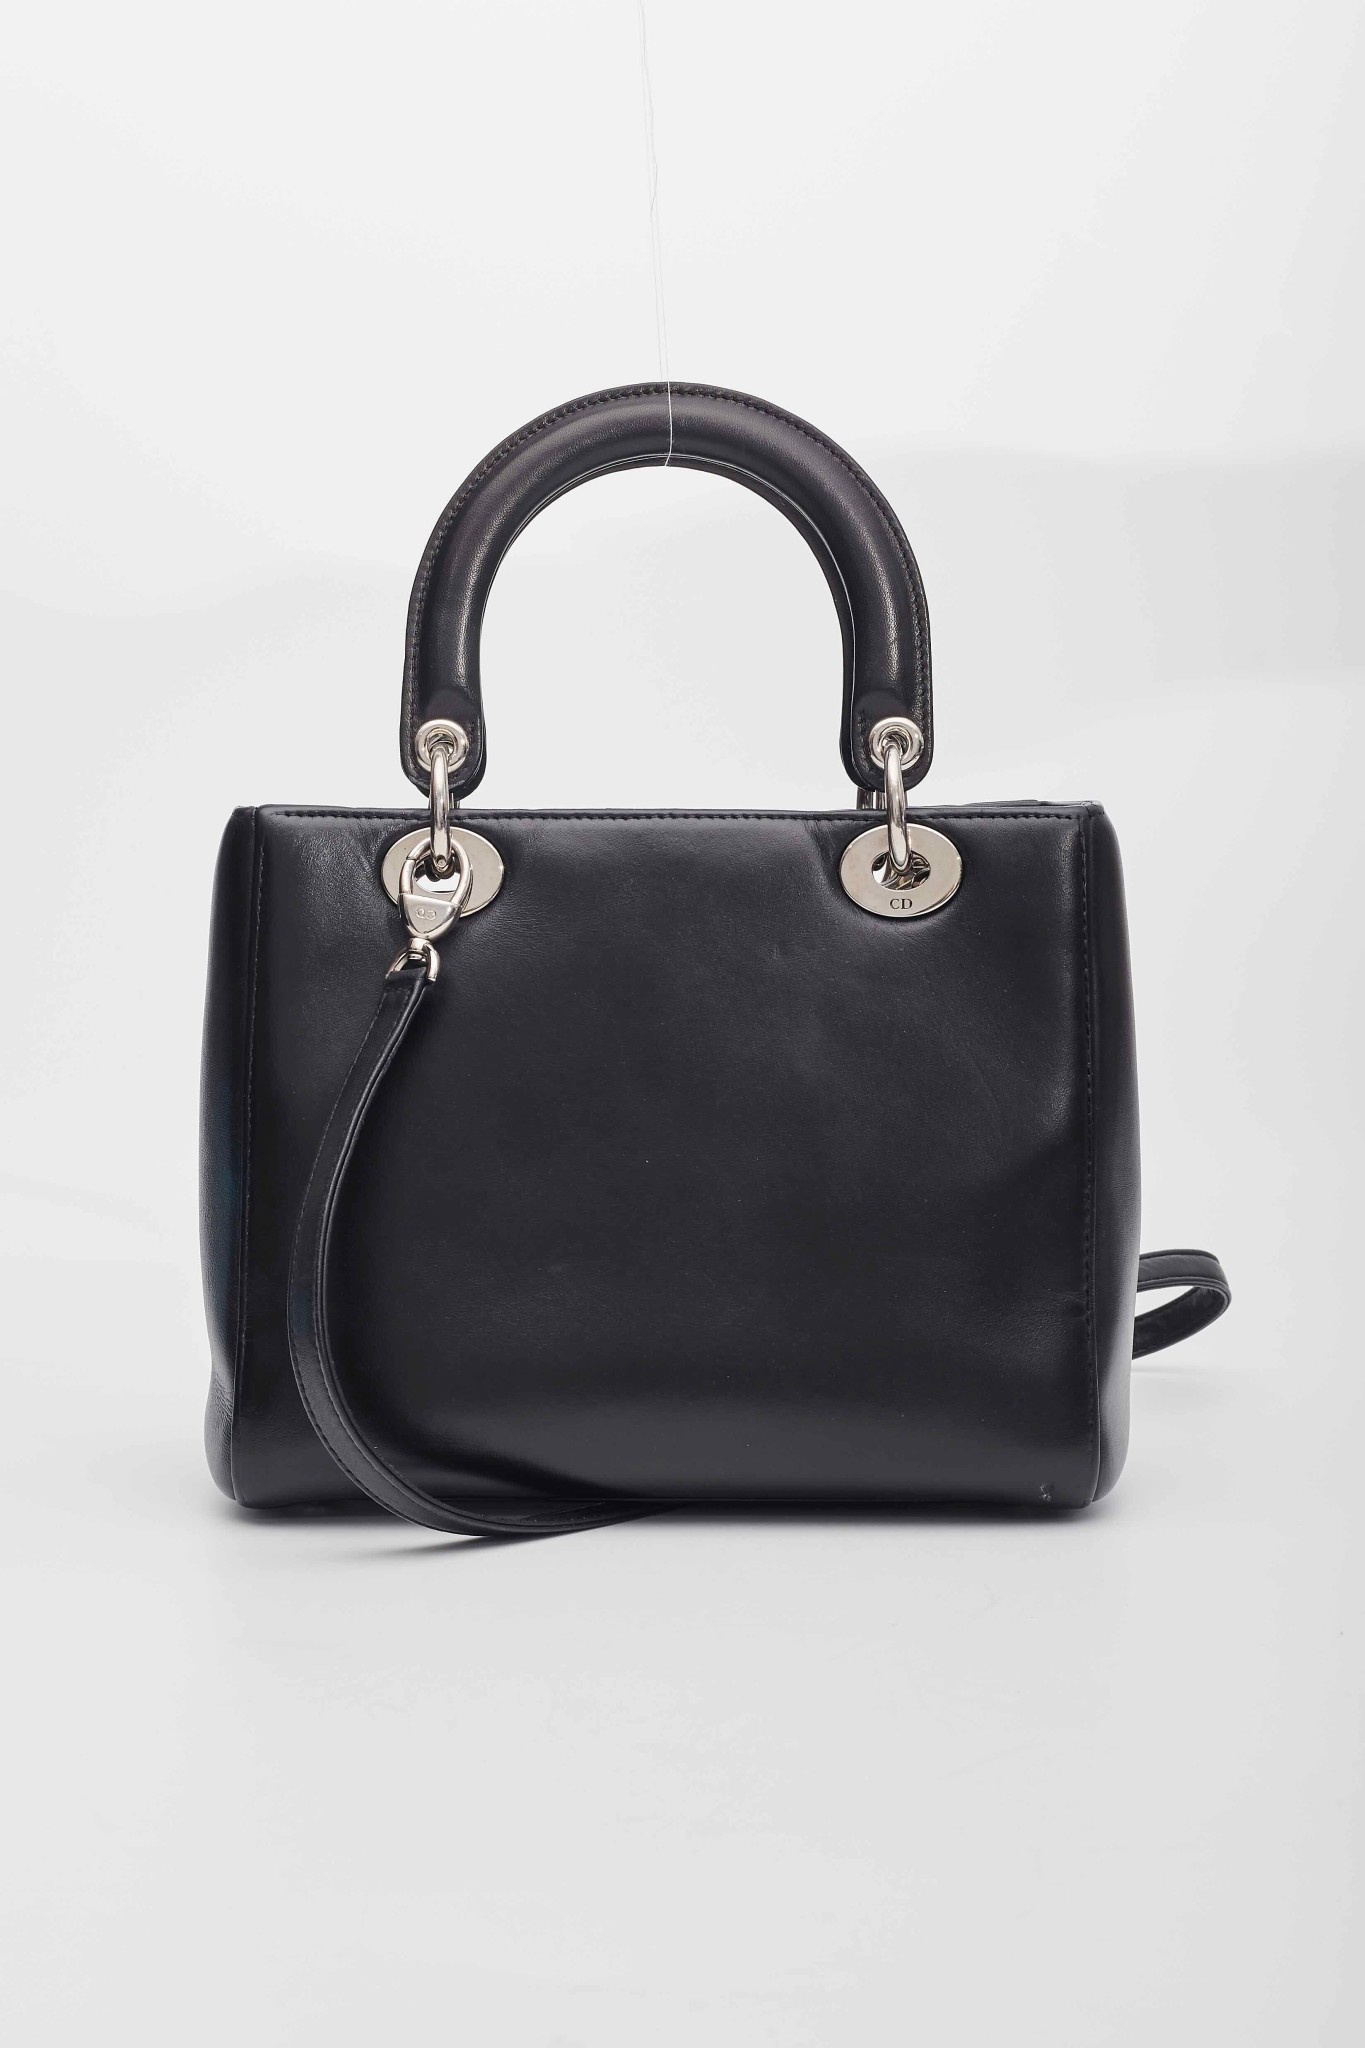 Lady Dior' handbag | V&A Explore The Collections